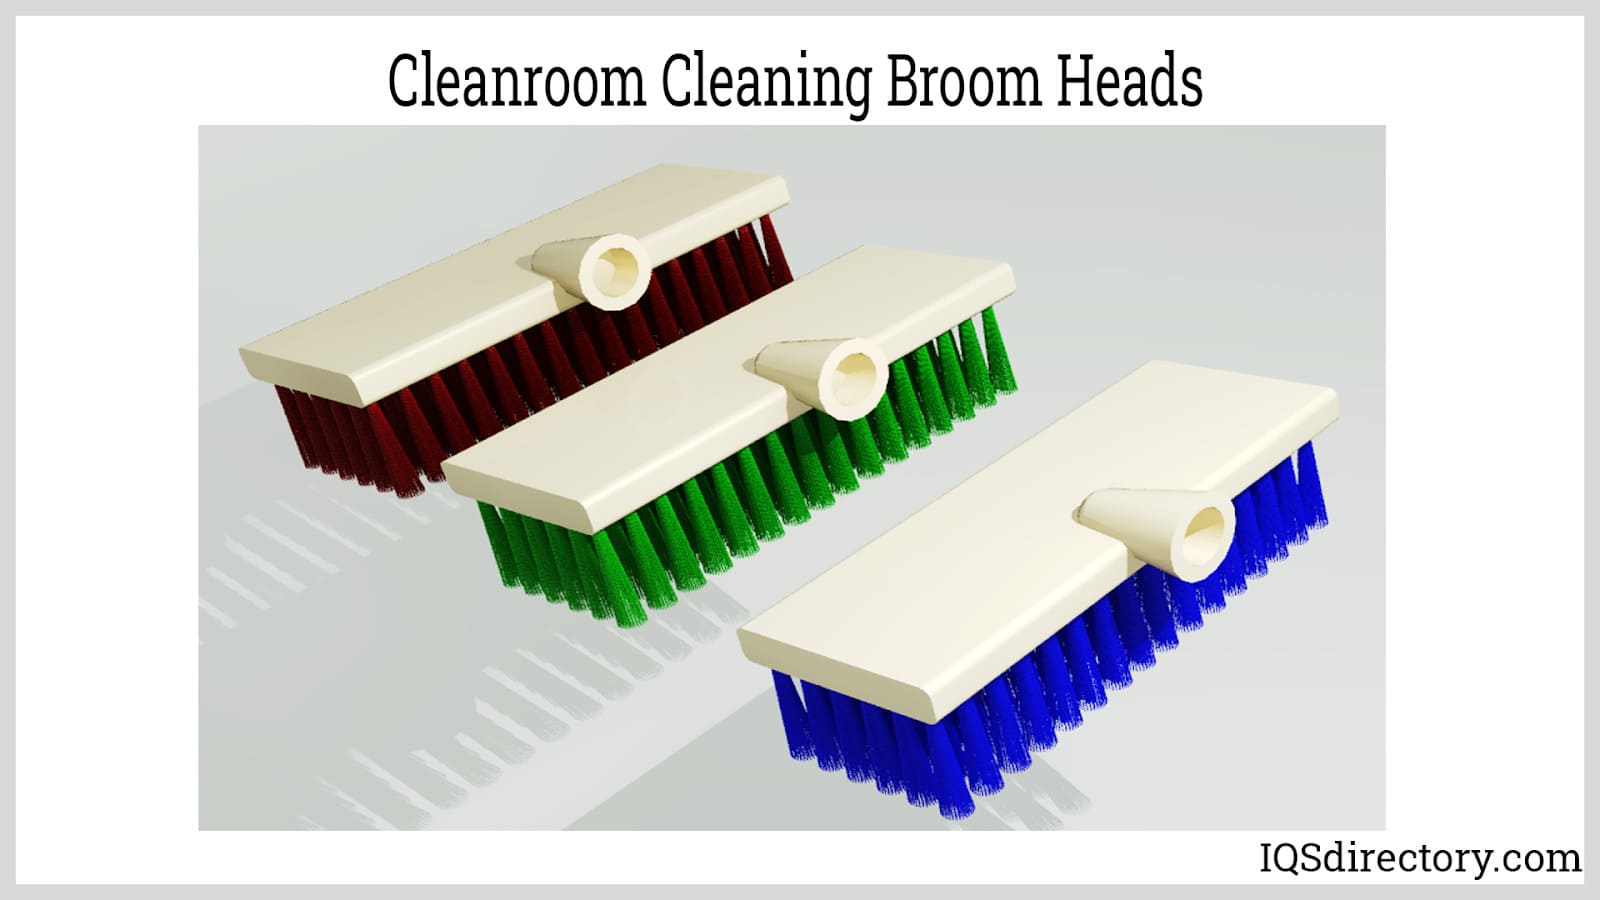 Cleanroom Cleaning Broom Heads